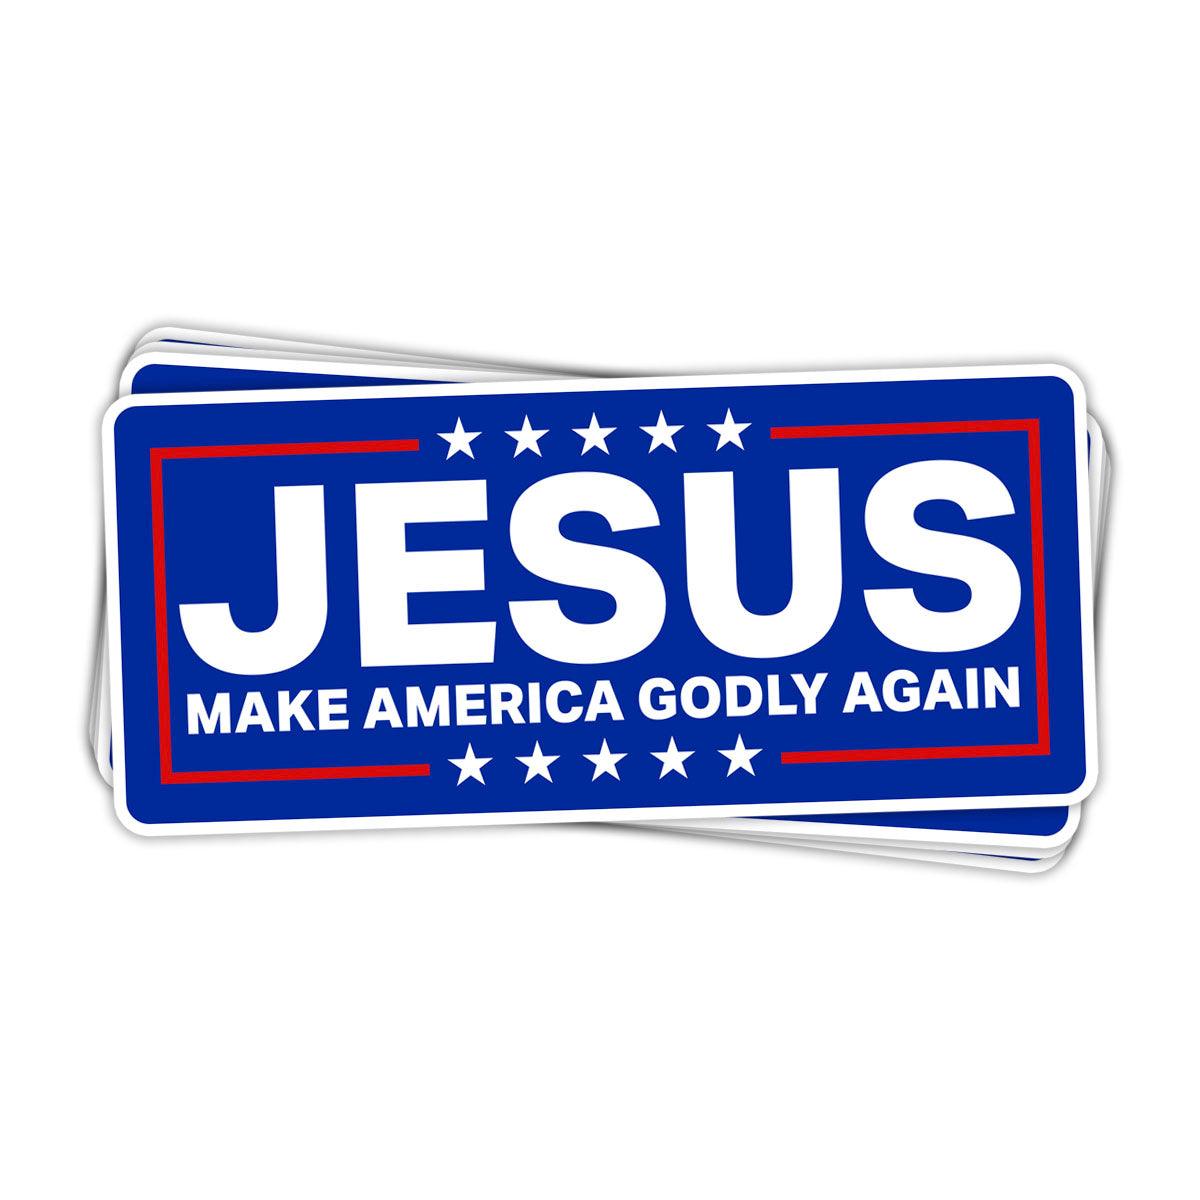 Jesus Make America Godly Again Decals - Our True God